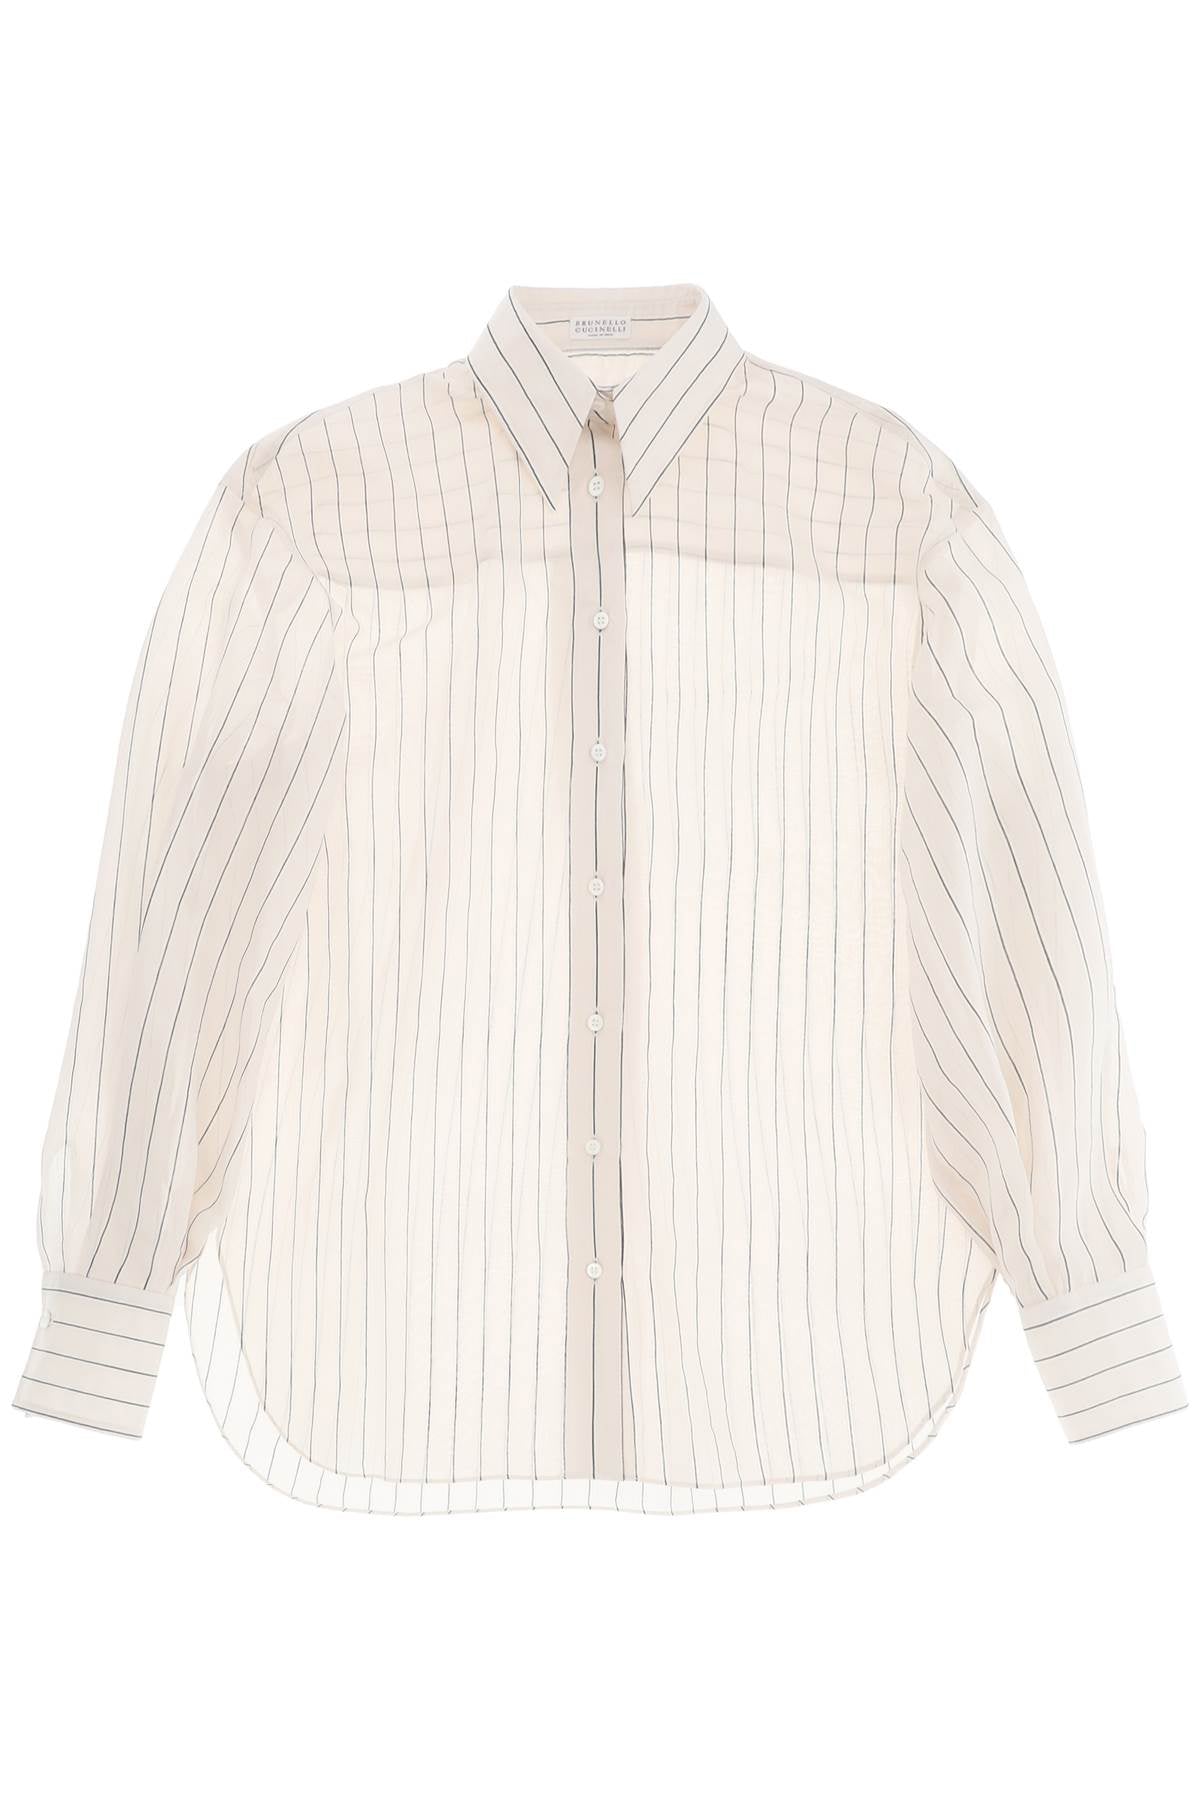 Brunello Cucinelli Lightweight Sparkling Stripe Shirt-women > clothing > shirts and blouses > shirts-Brunello Cucinelli-Urbanheer